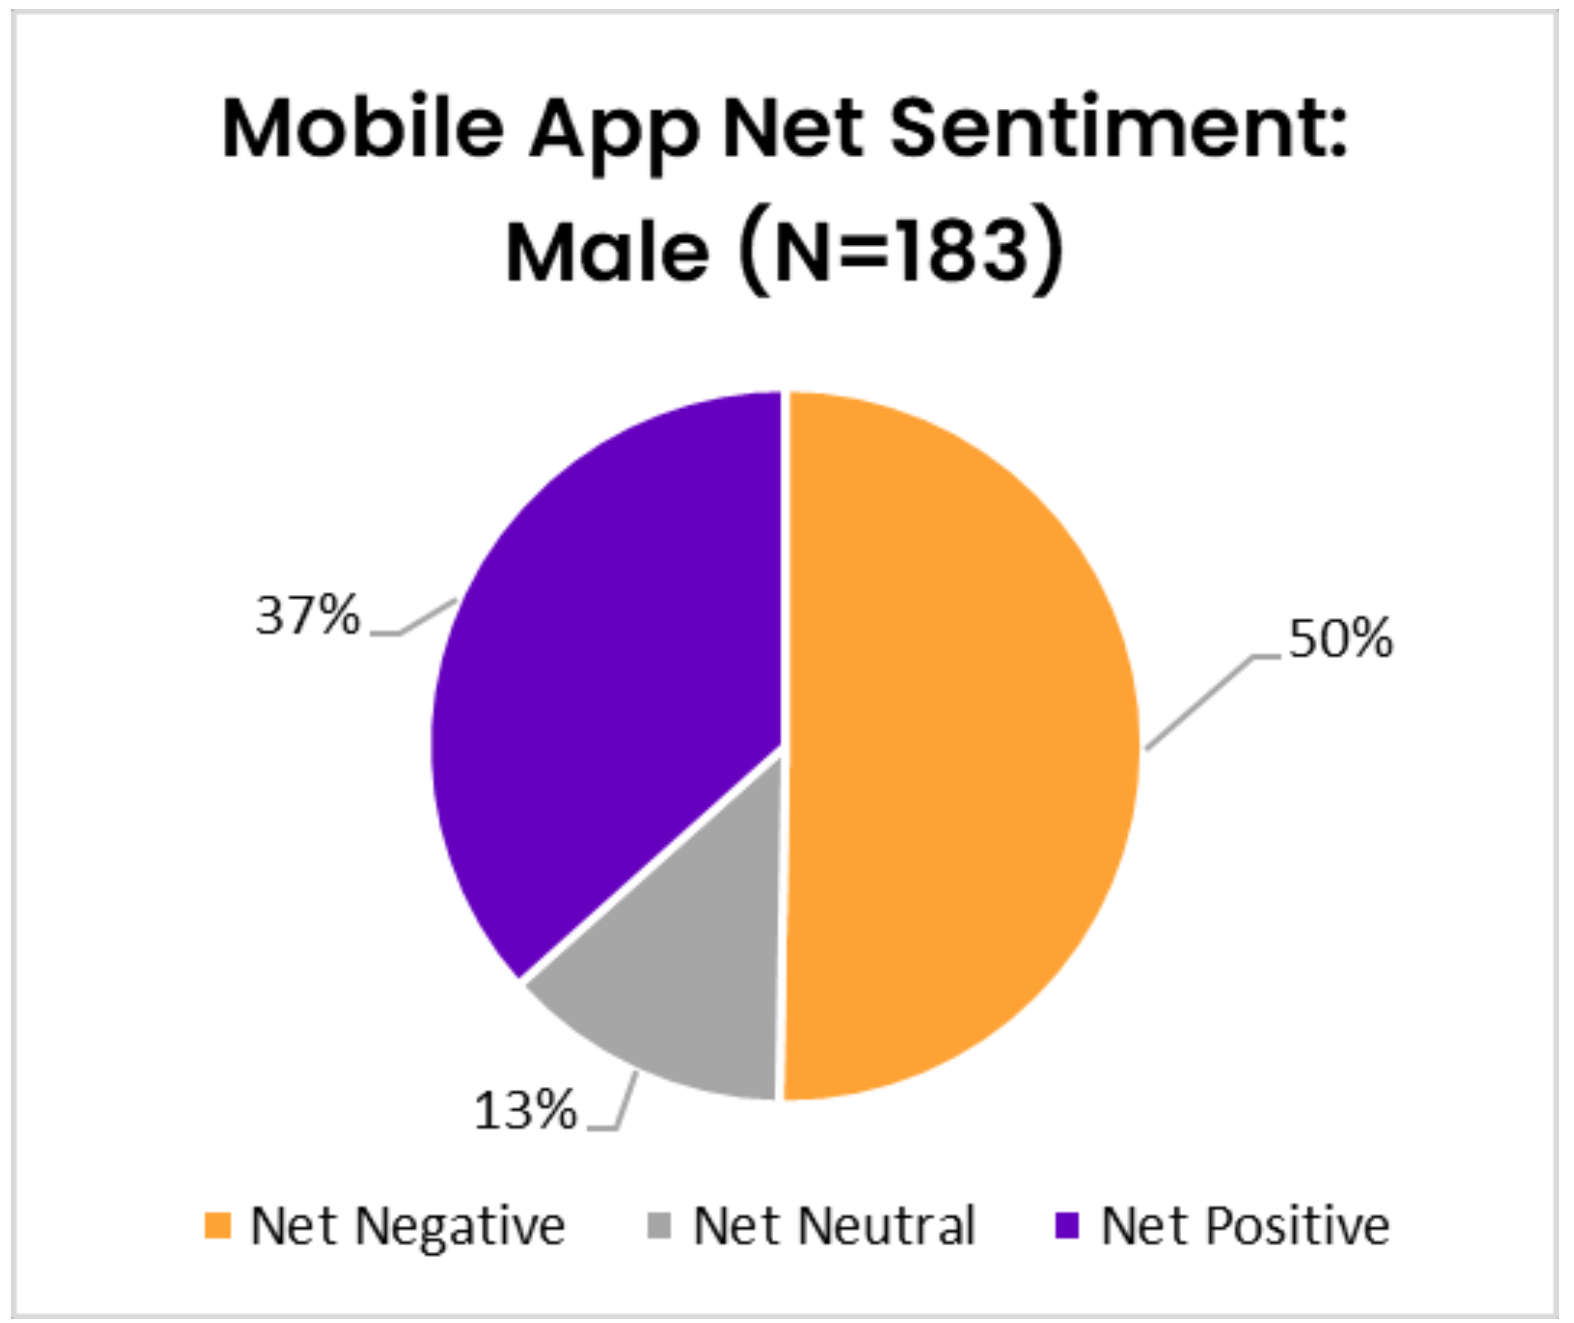 Figure 8- Mobile App Net Sentiment - Male